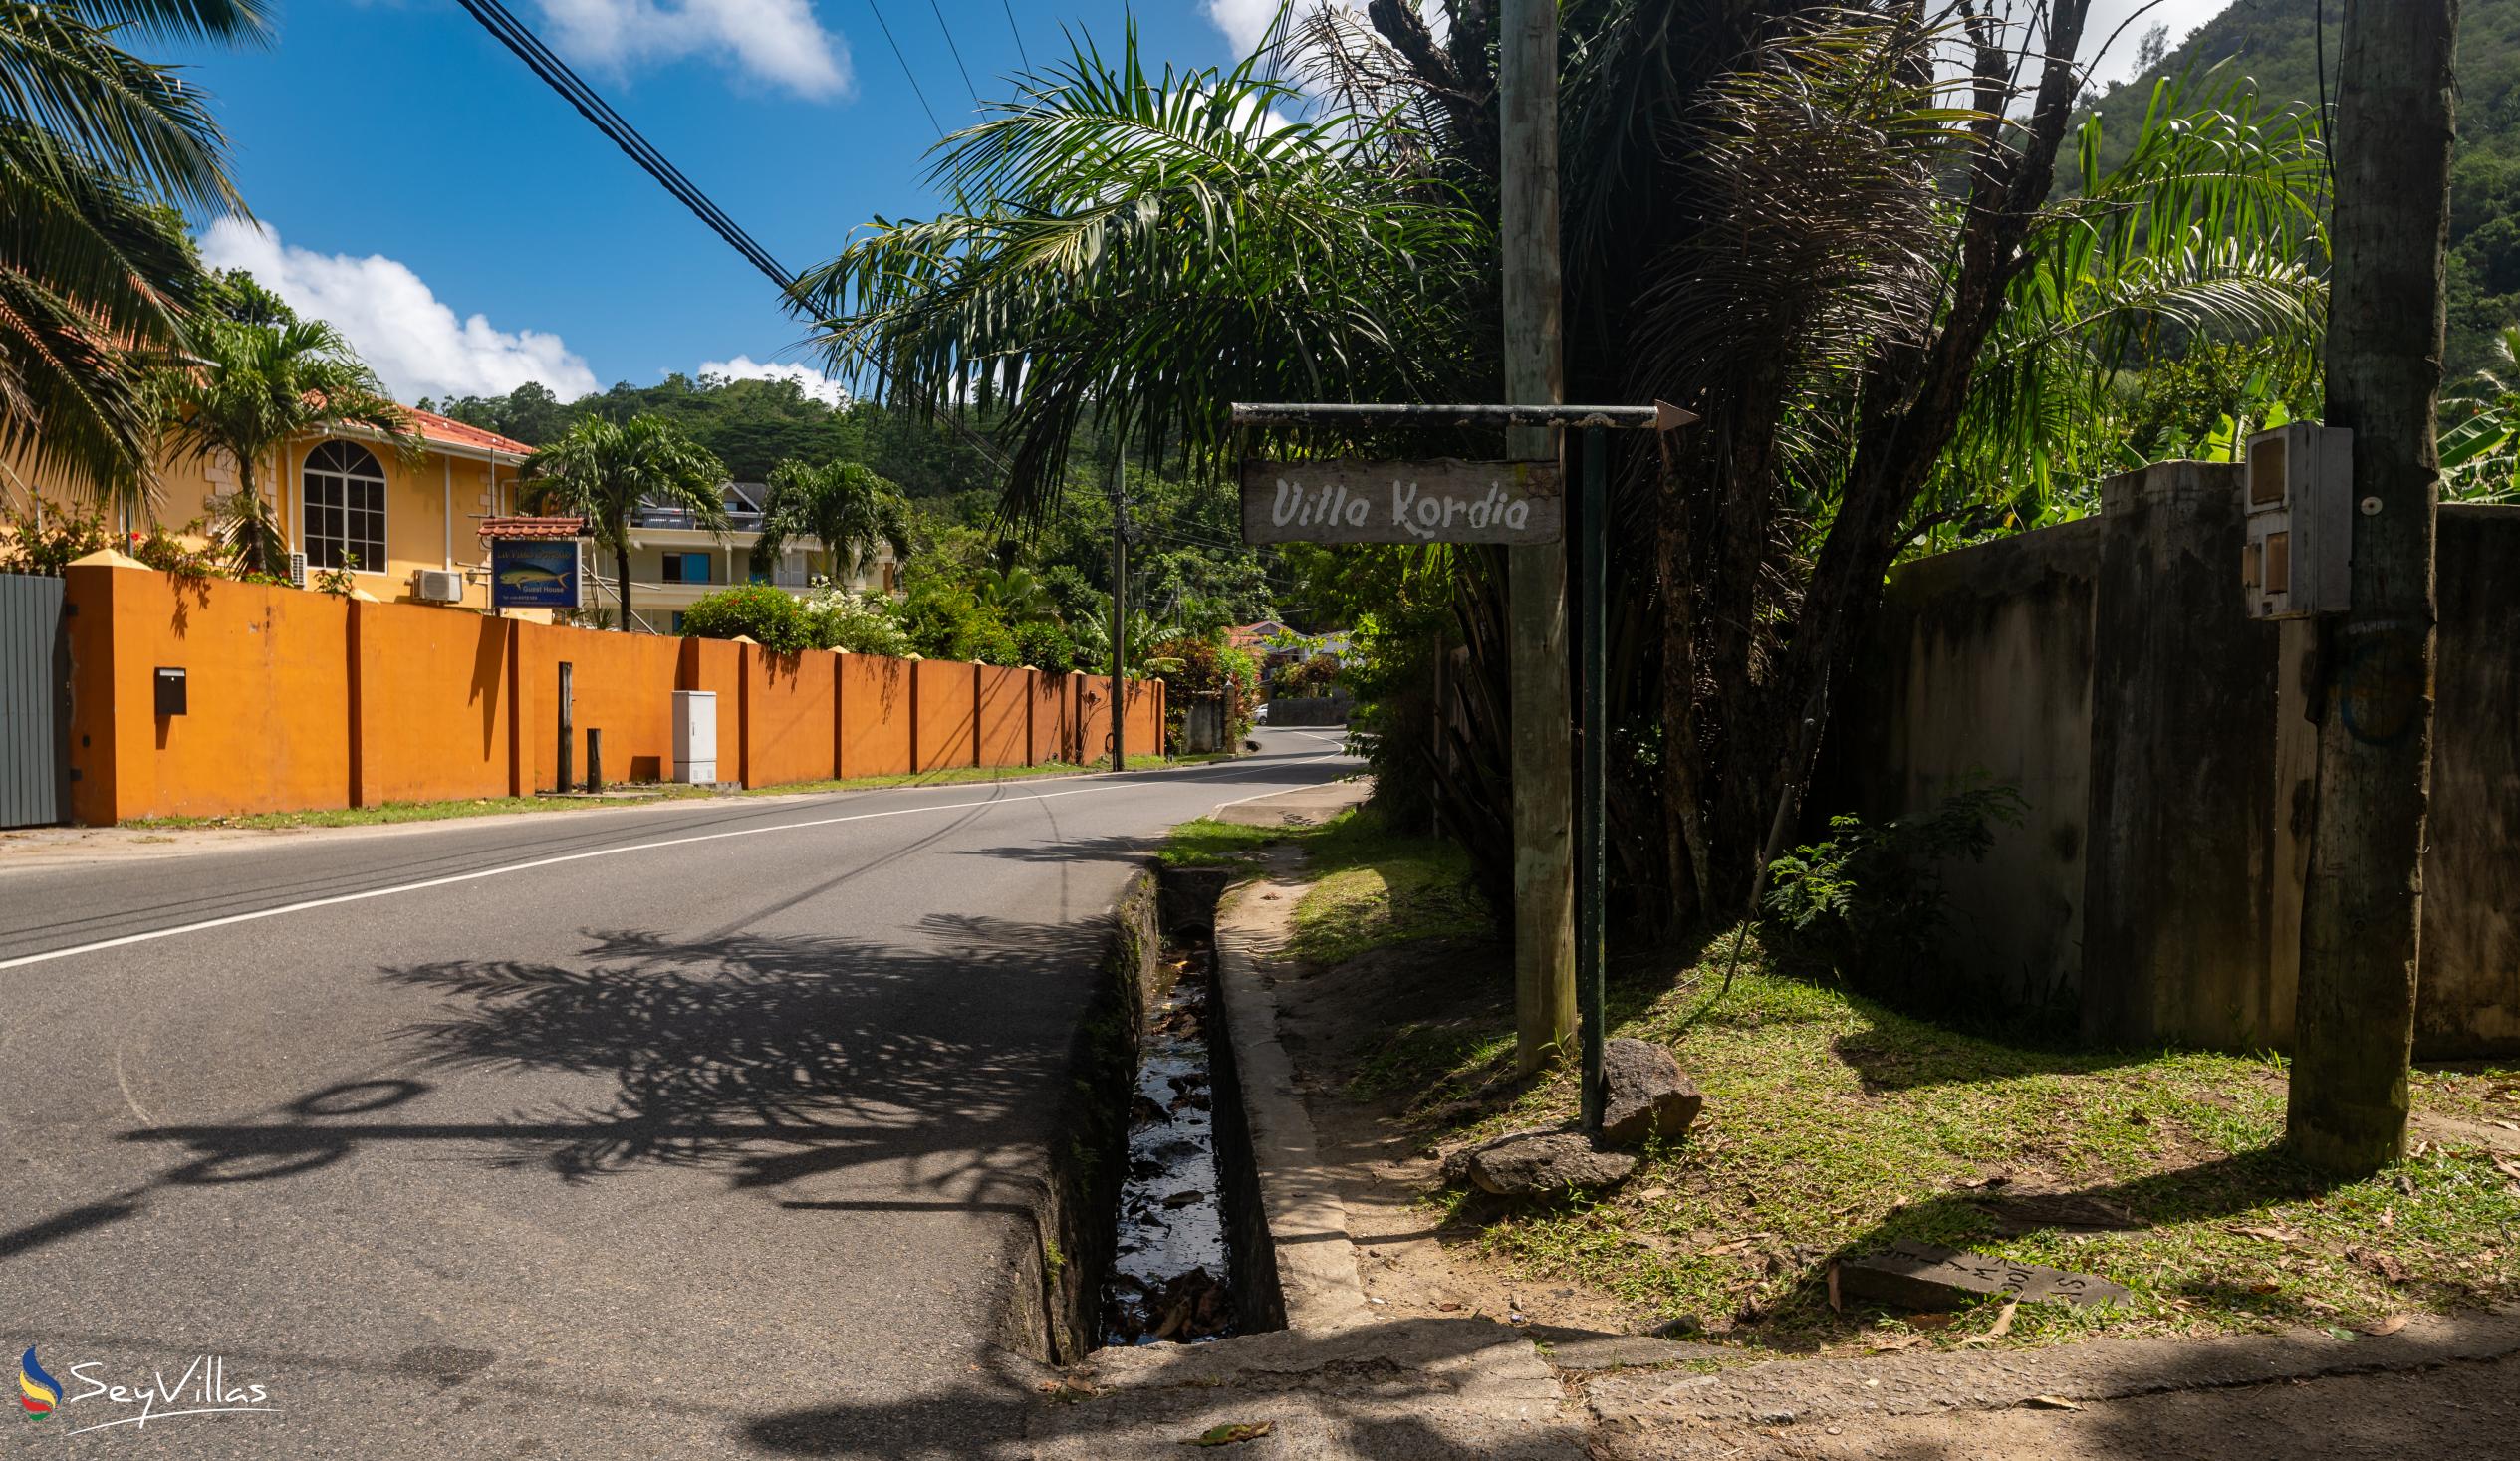 Foto 37: Villa Kordia - Location - Mahé (Seychelles)